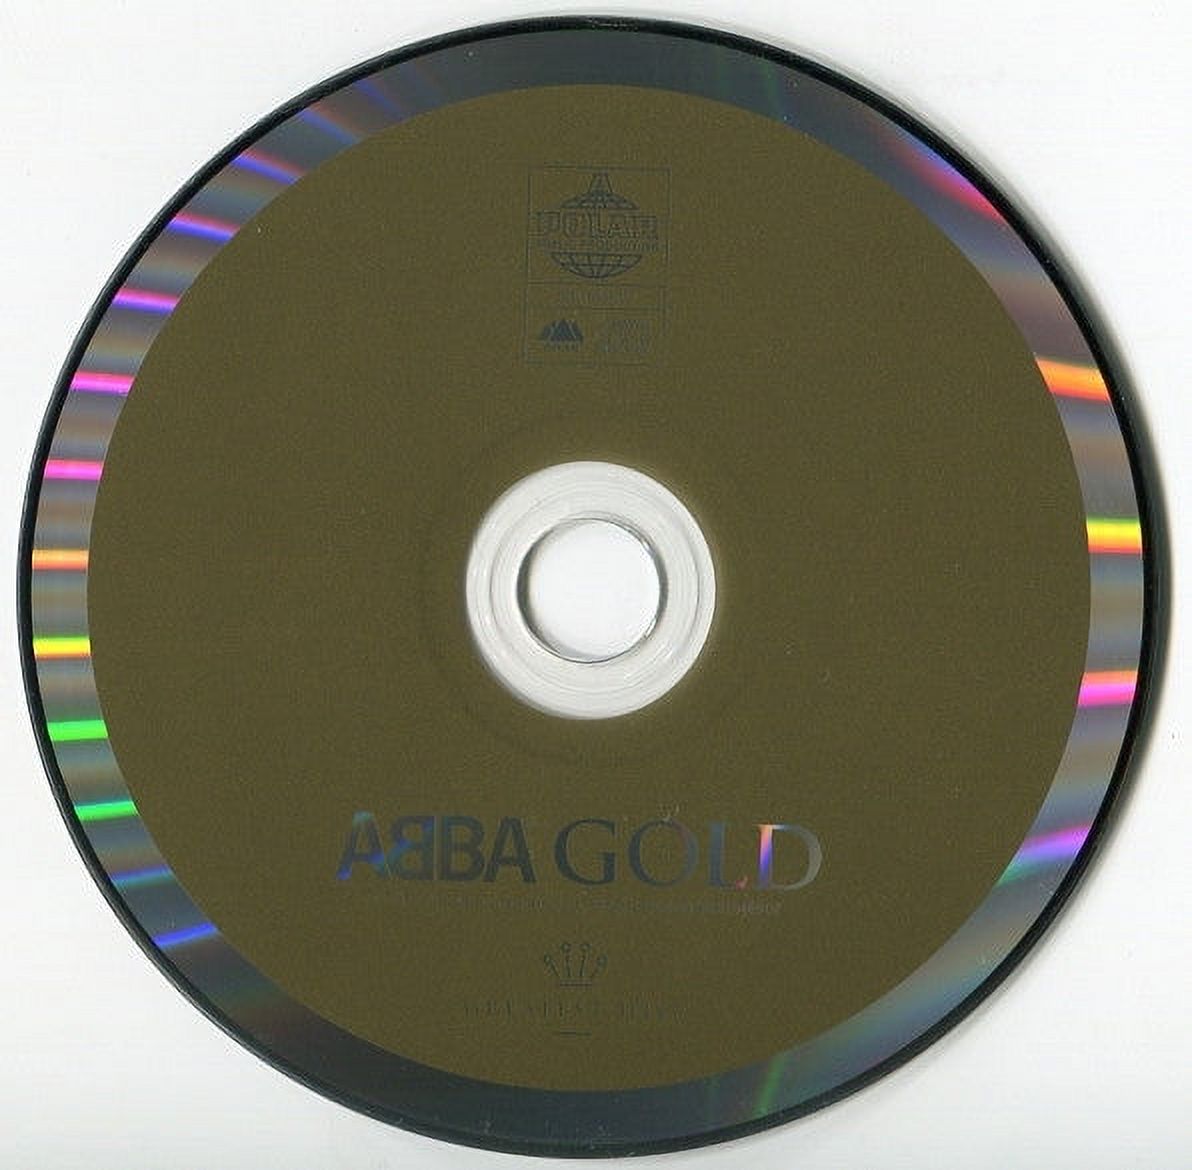 ABBA - Gold - Pop Rock - CD - image 3 of 5